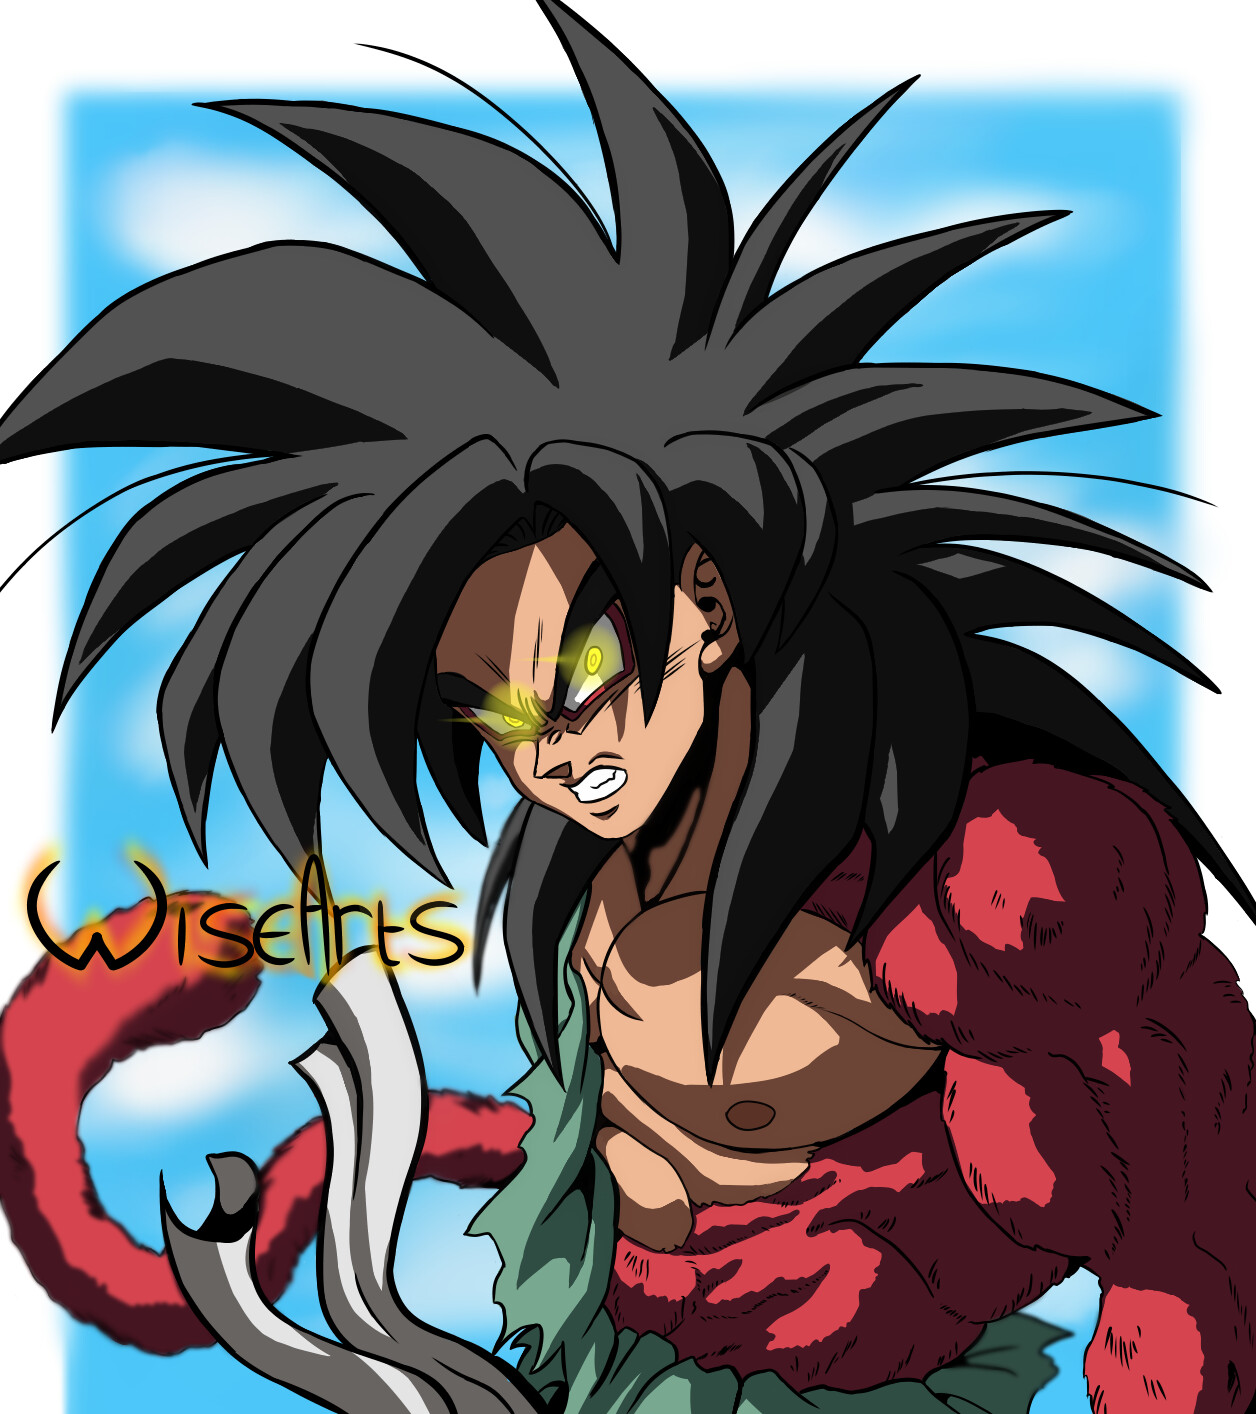 ArtStation - Goku SSJ4